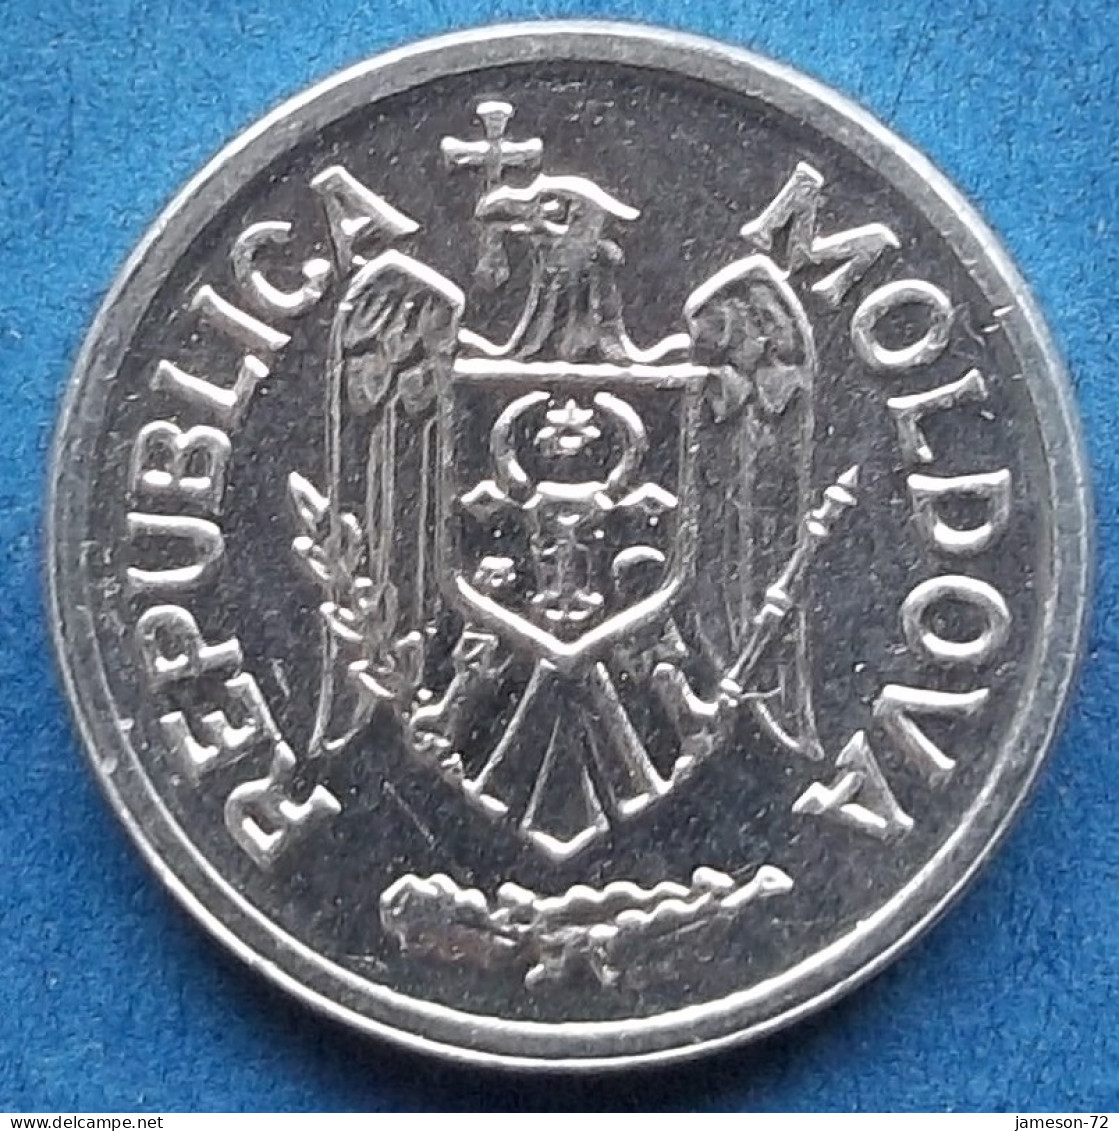 MOLDOVA - 5 Bani 2012 KM# 2 Republic (1991) - Edelweiss Coins - Moldavië